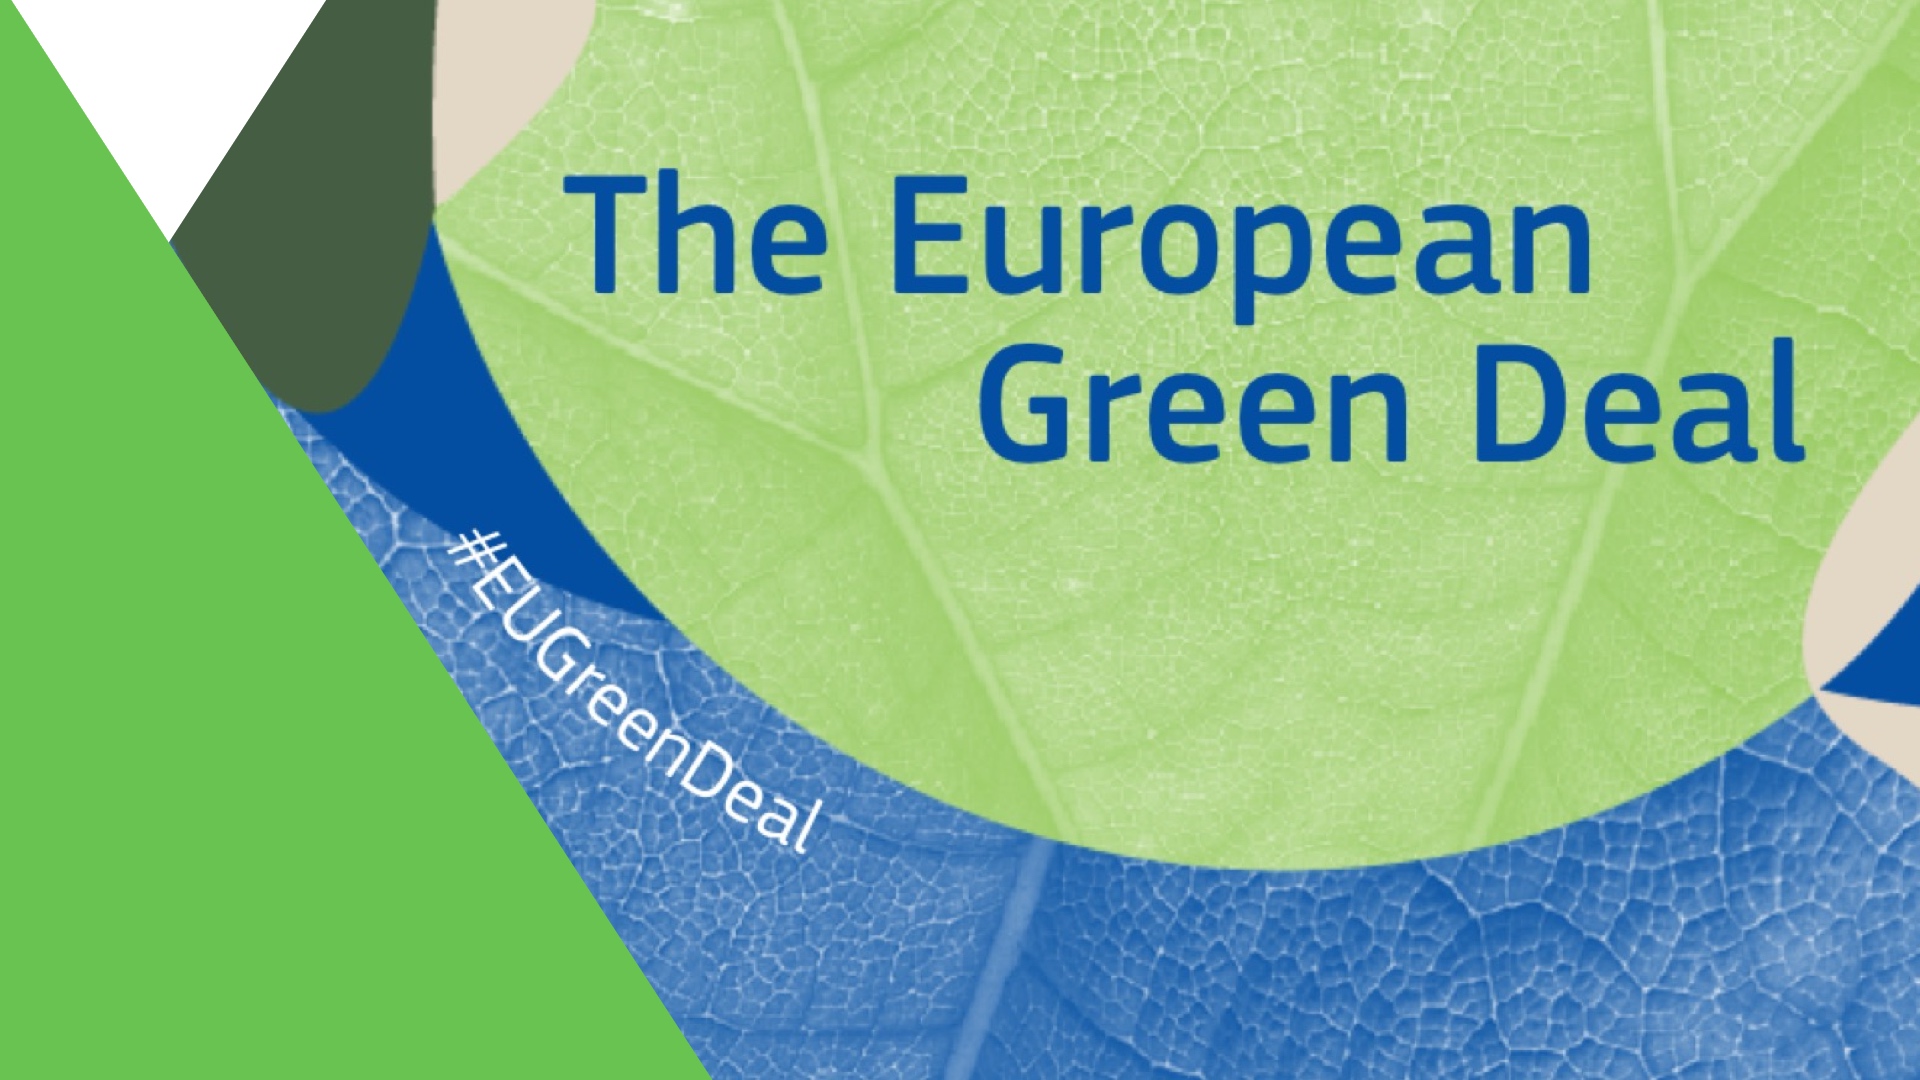 European Green Deal Logo